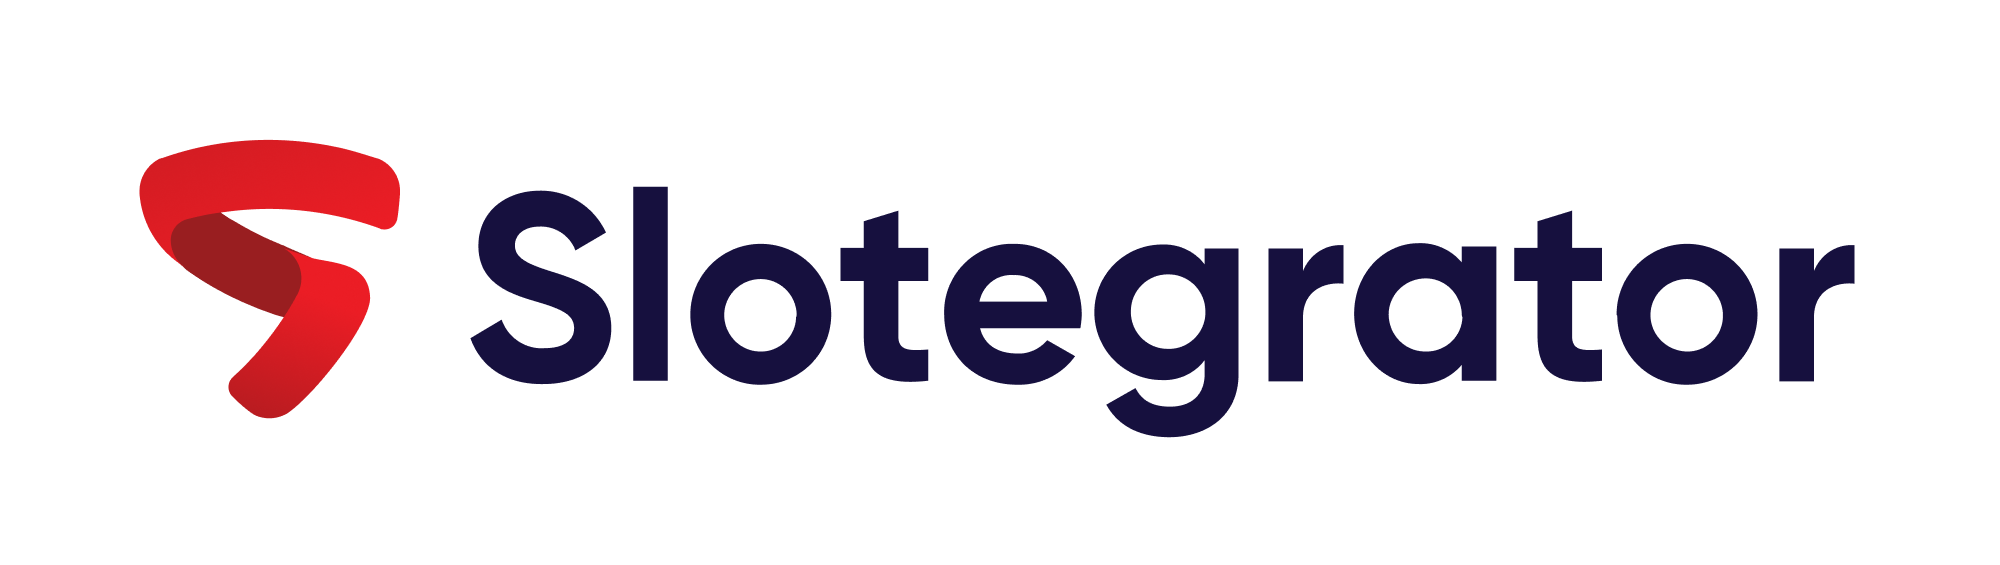 Slotegrator - Company logo